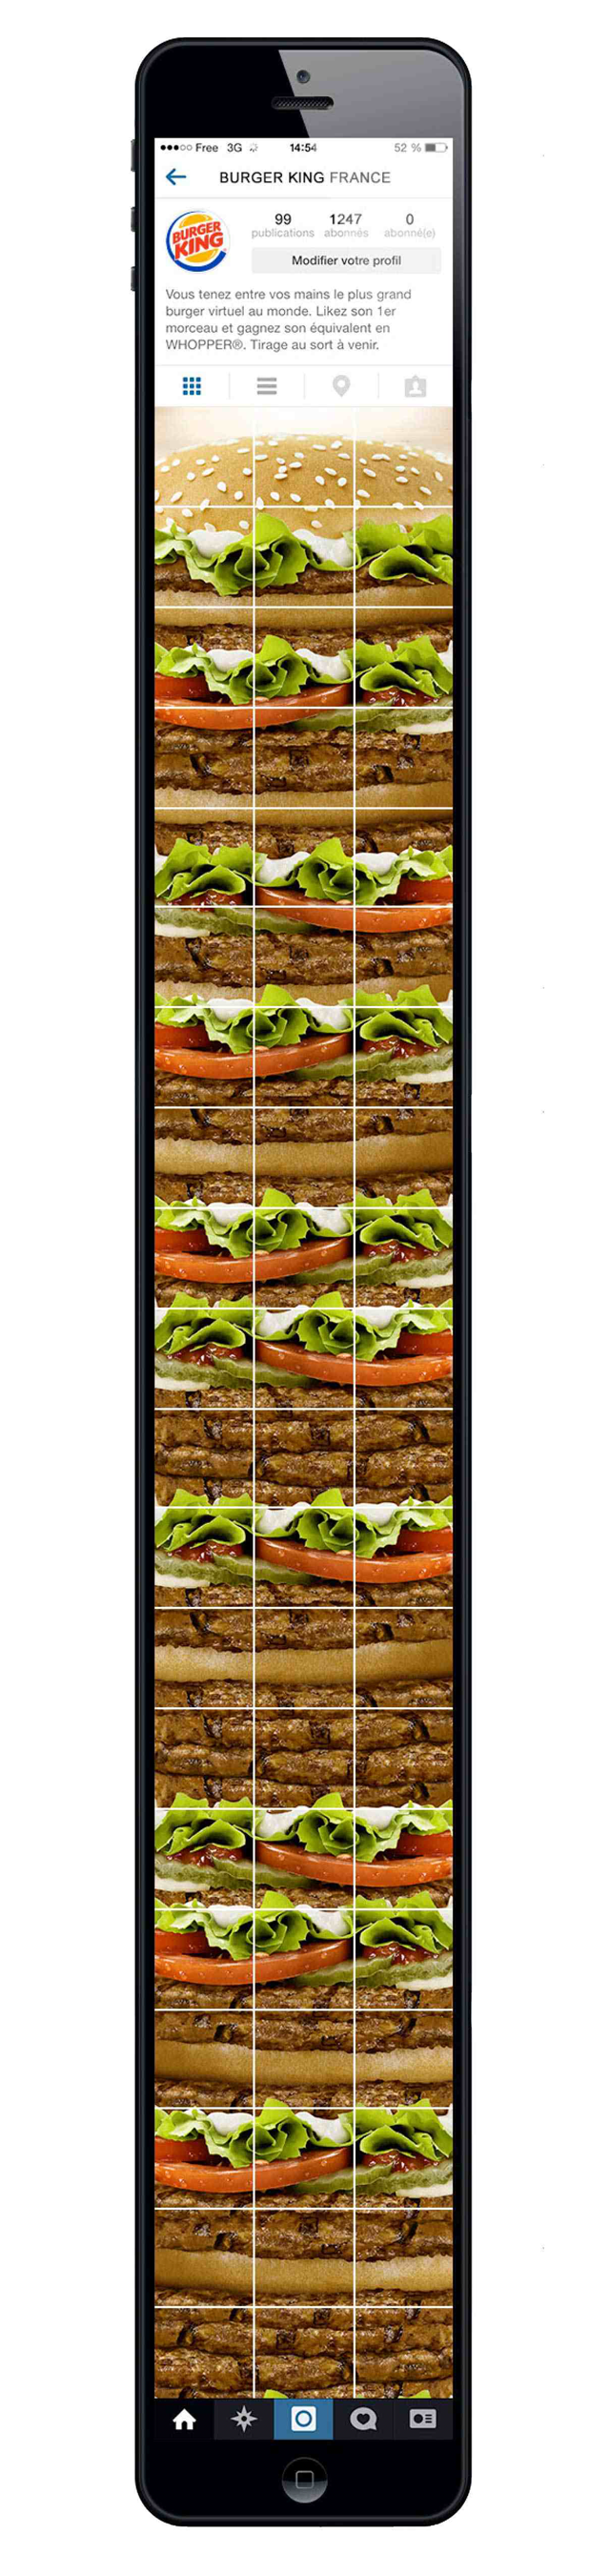 Burger-King-the-biggest-virtual-burger-instagram